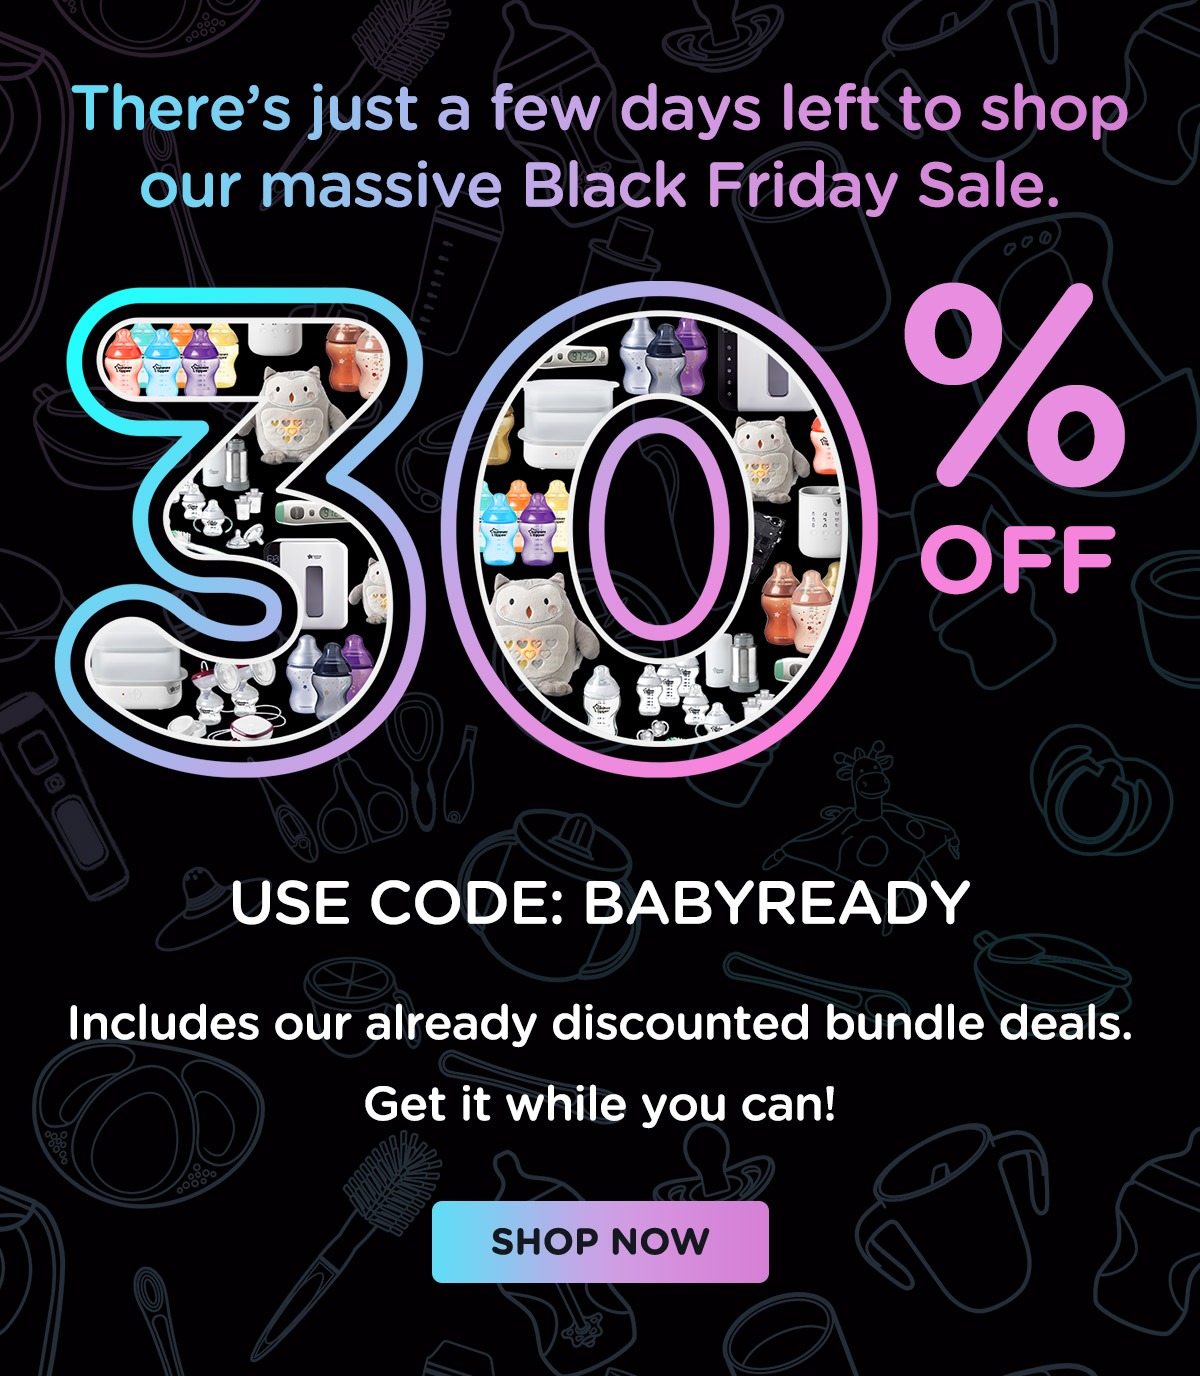 Black Friday Sale - 30% OFF USE CODE: BABYREADY